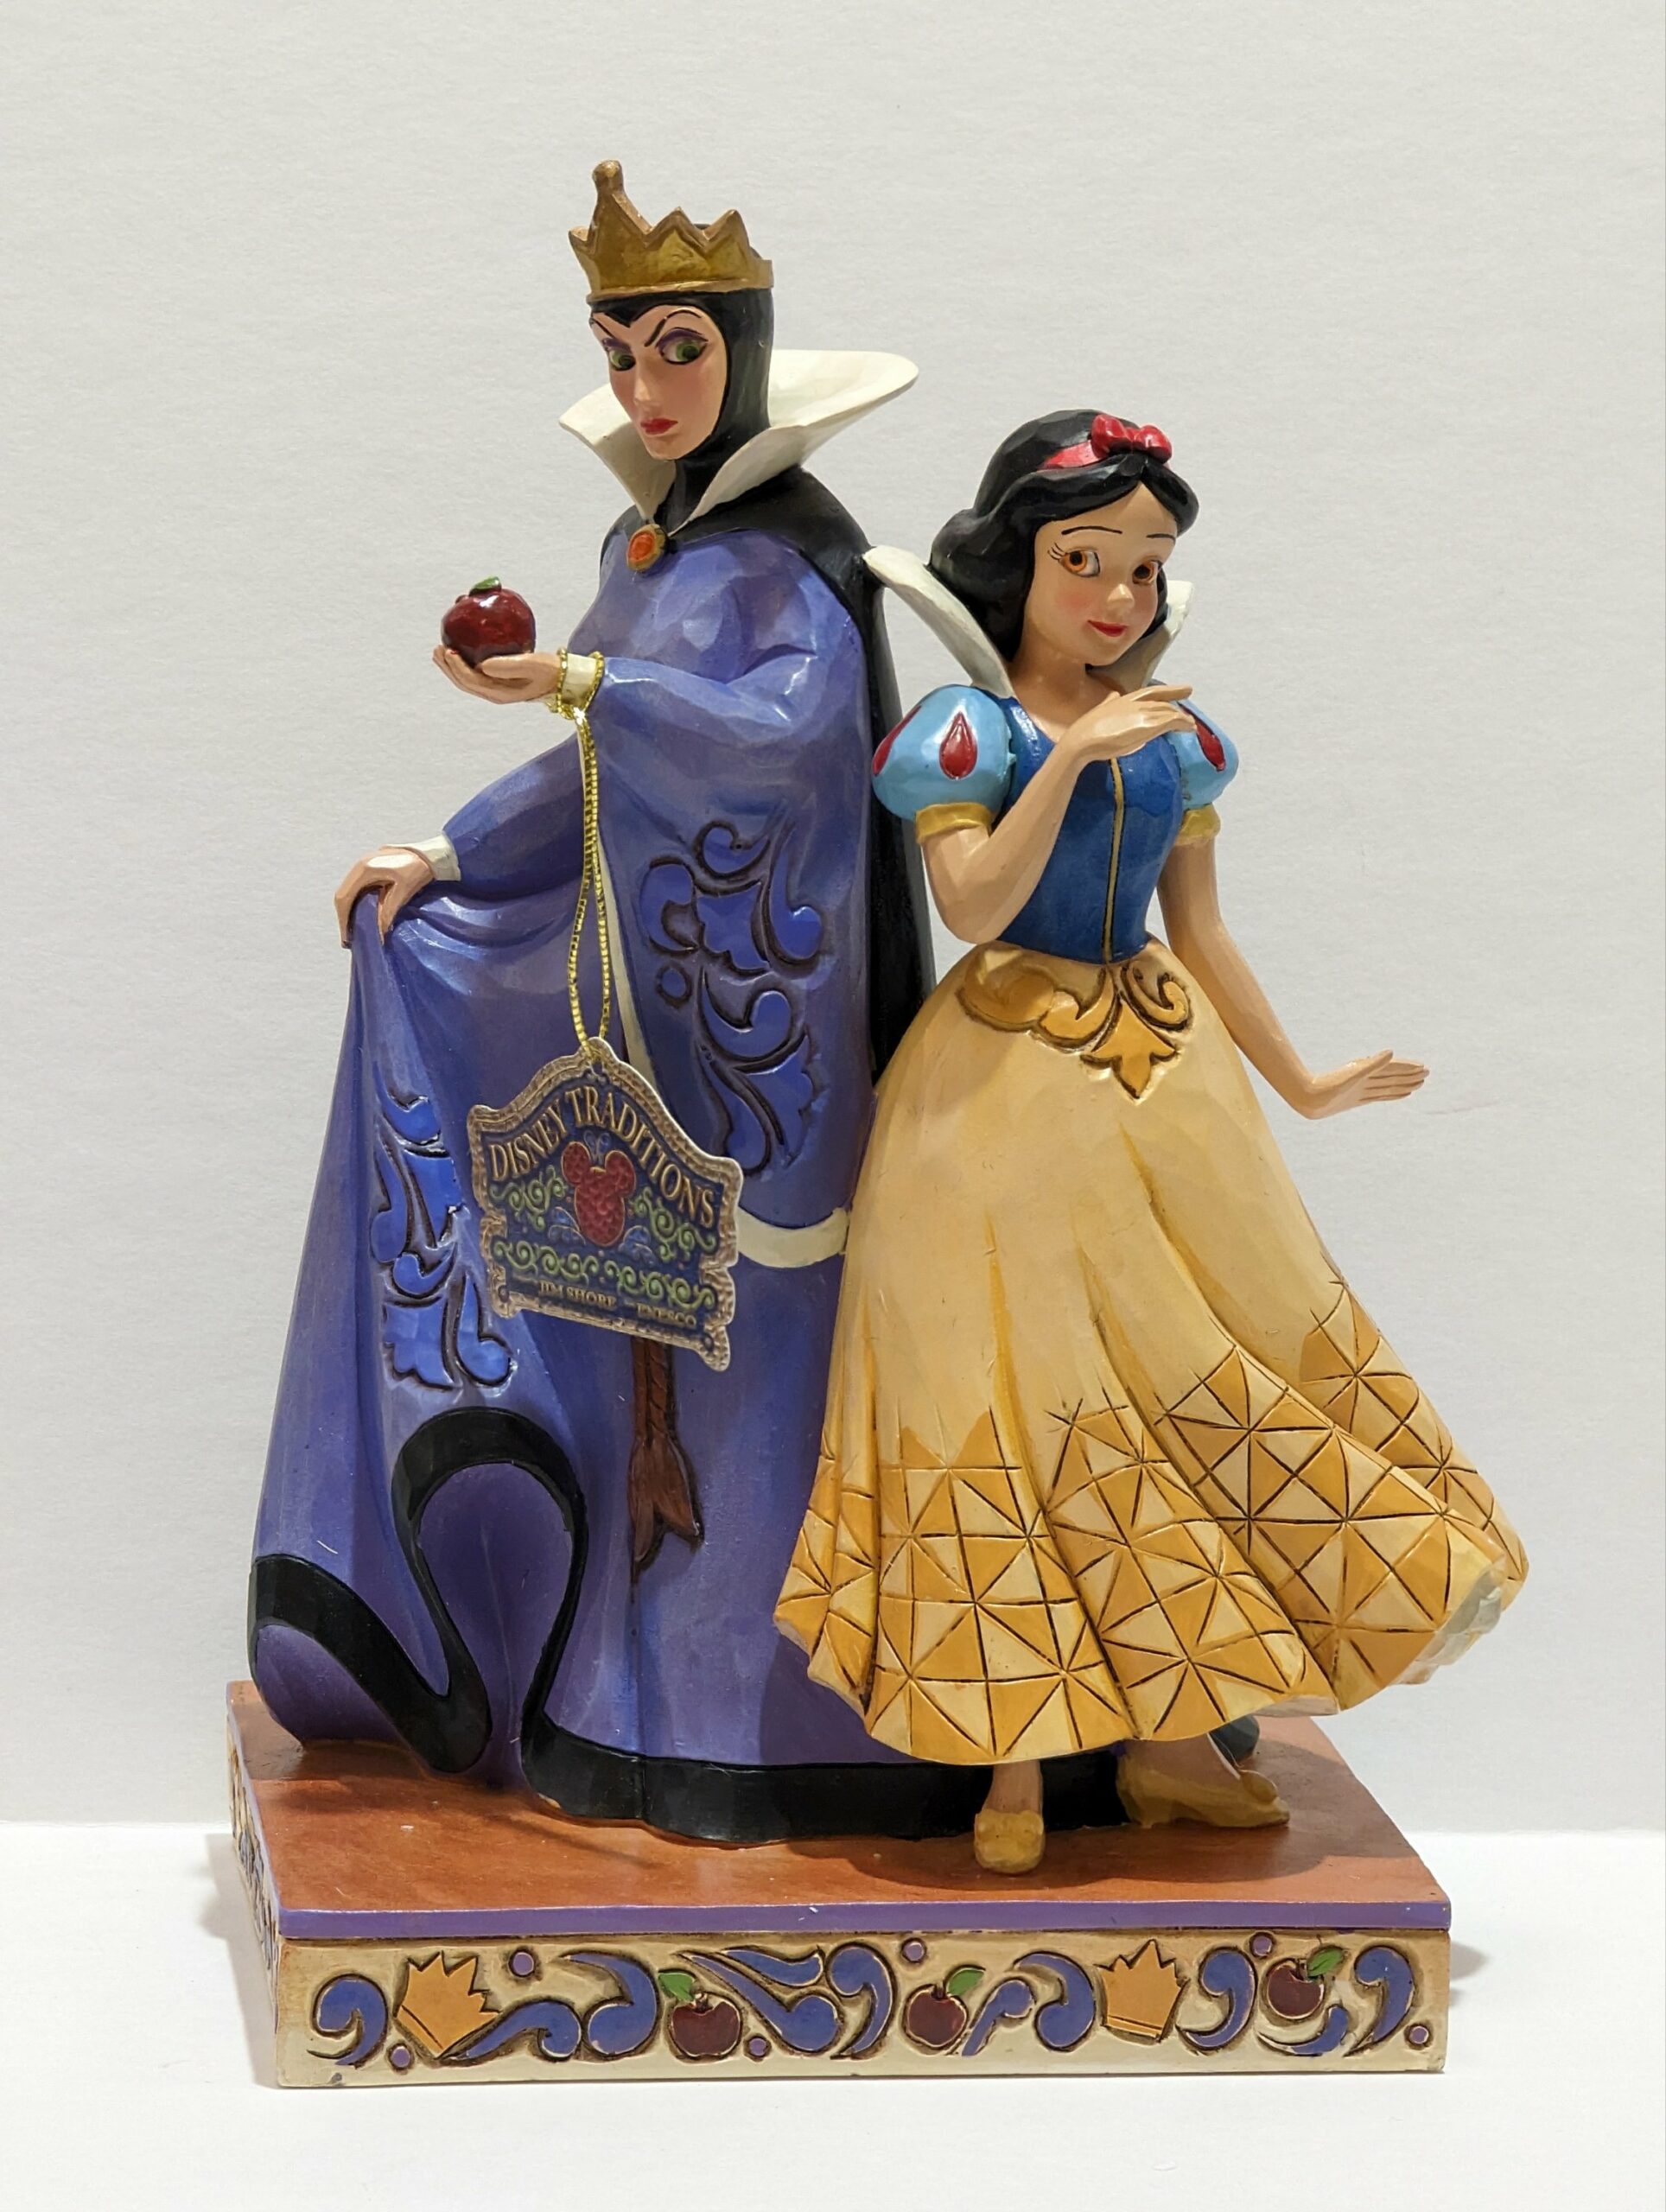 Enesco Disney Traditions By Jim Shore “Evil and Innocence” Snow White  Figurine 6008067 - Treasure Trove Collectibles & Marketplace